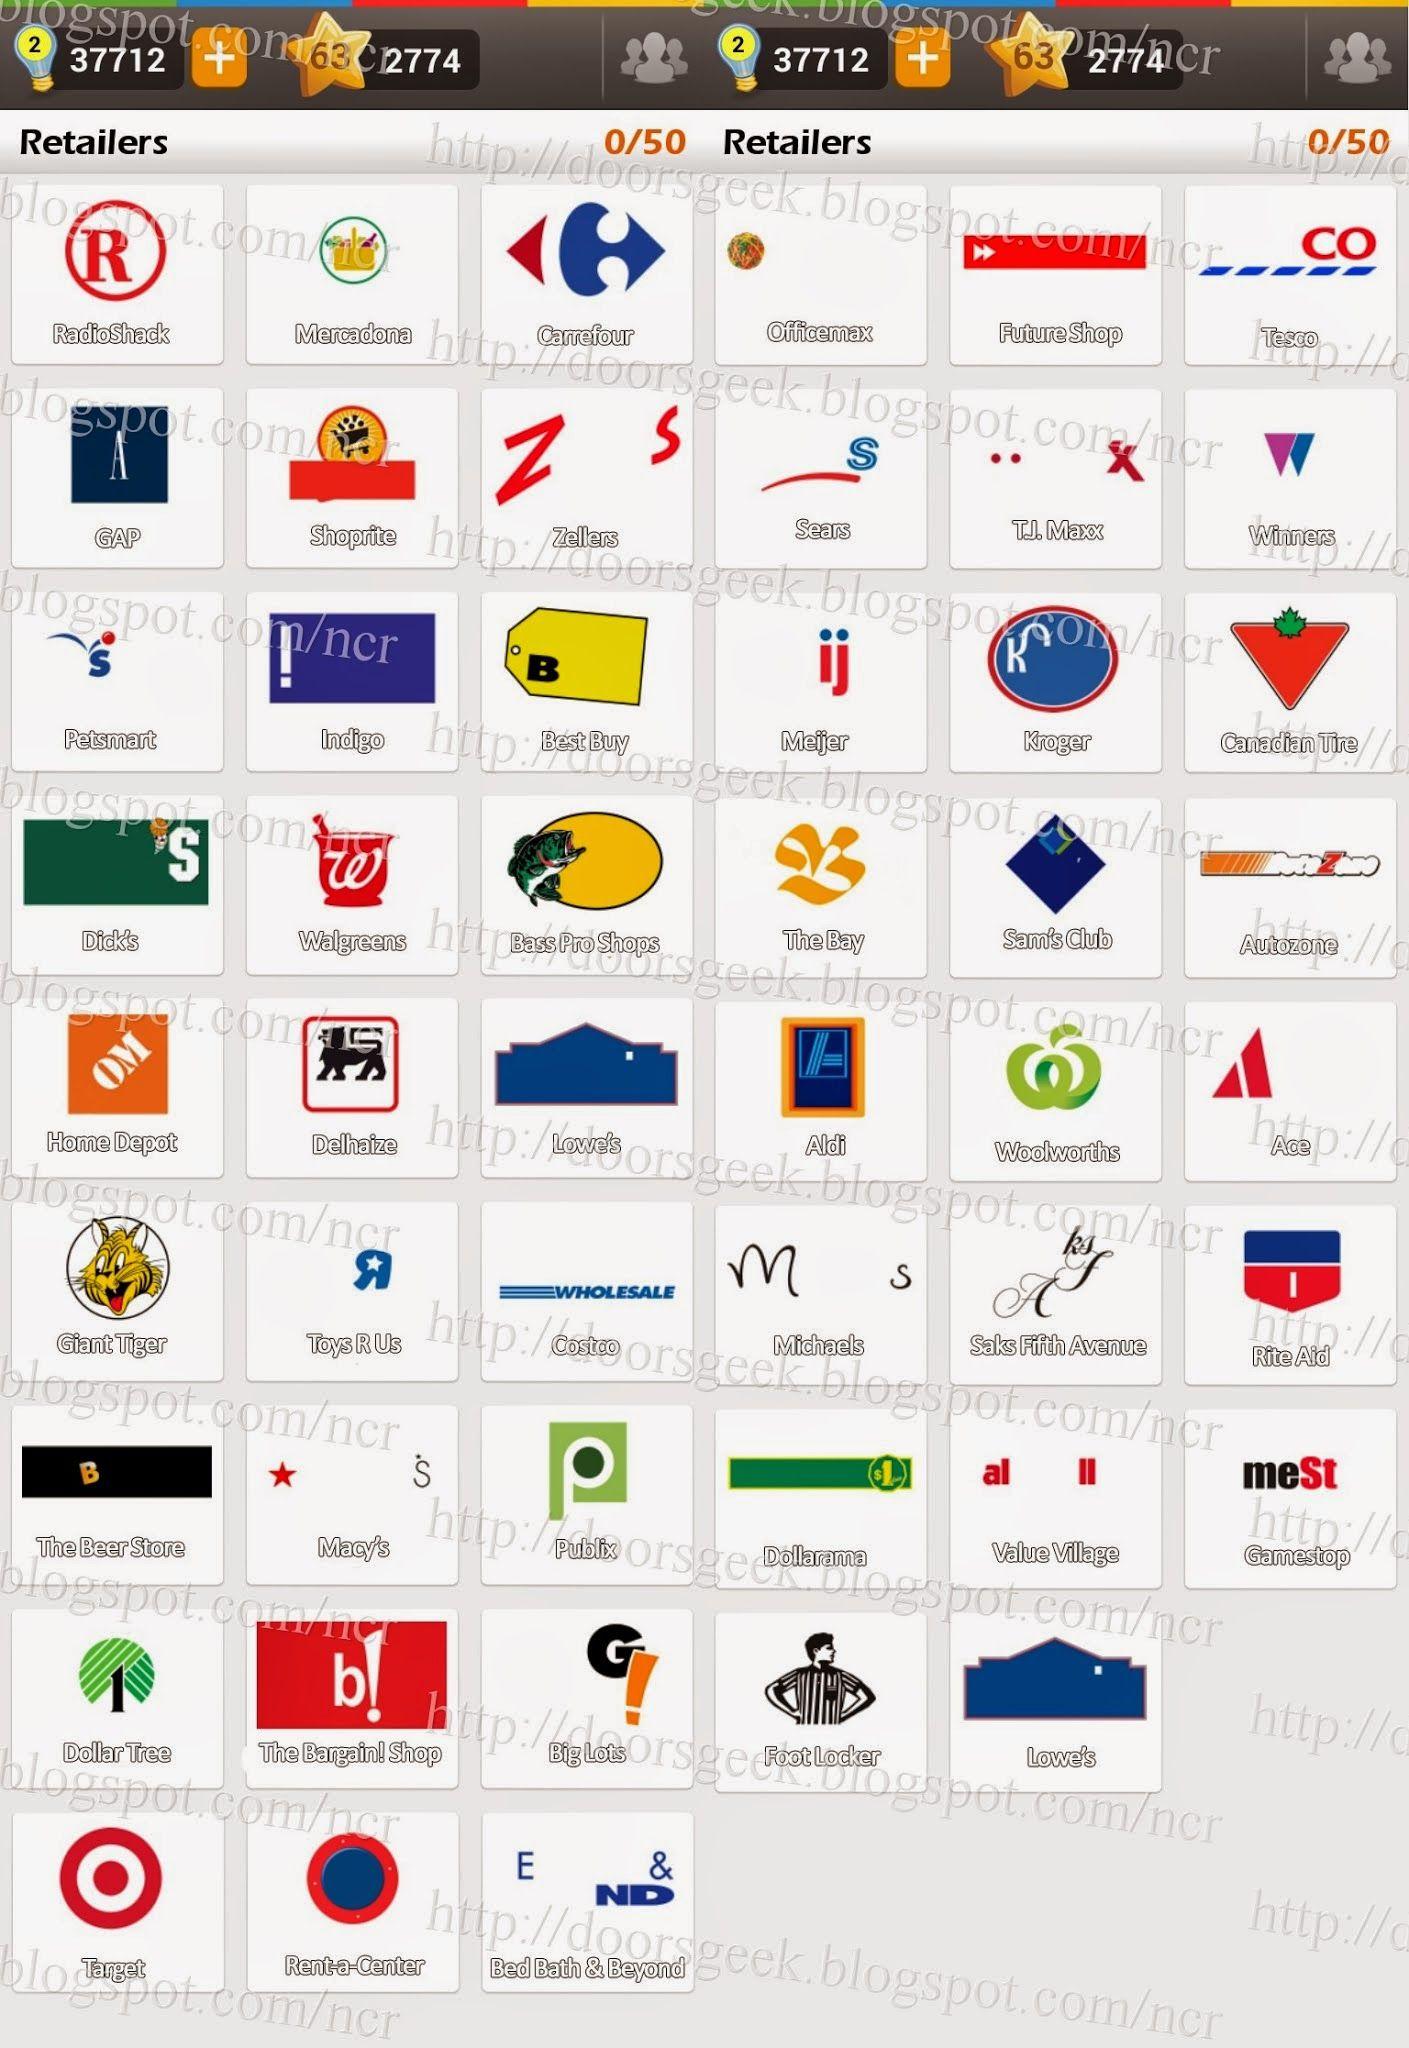 Retailer Logo - Logo Game: Guess the Brand [Bonus] Retailers ~ Doors Geek